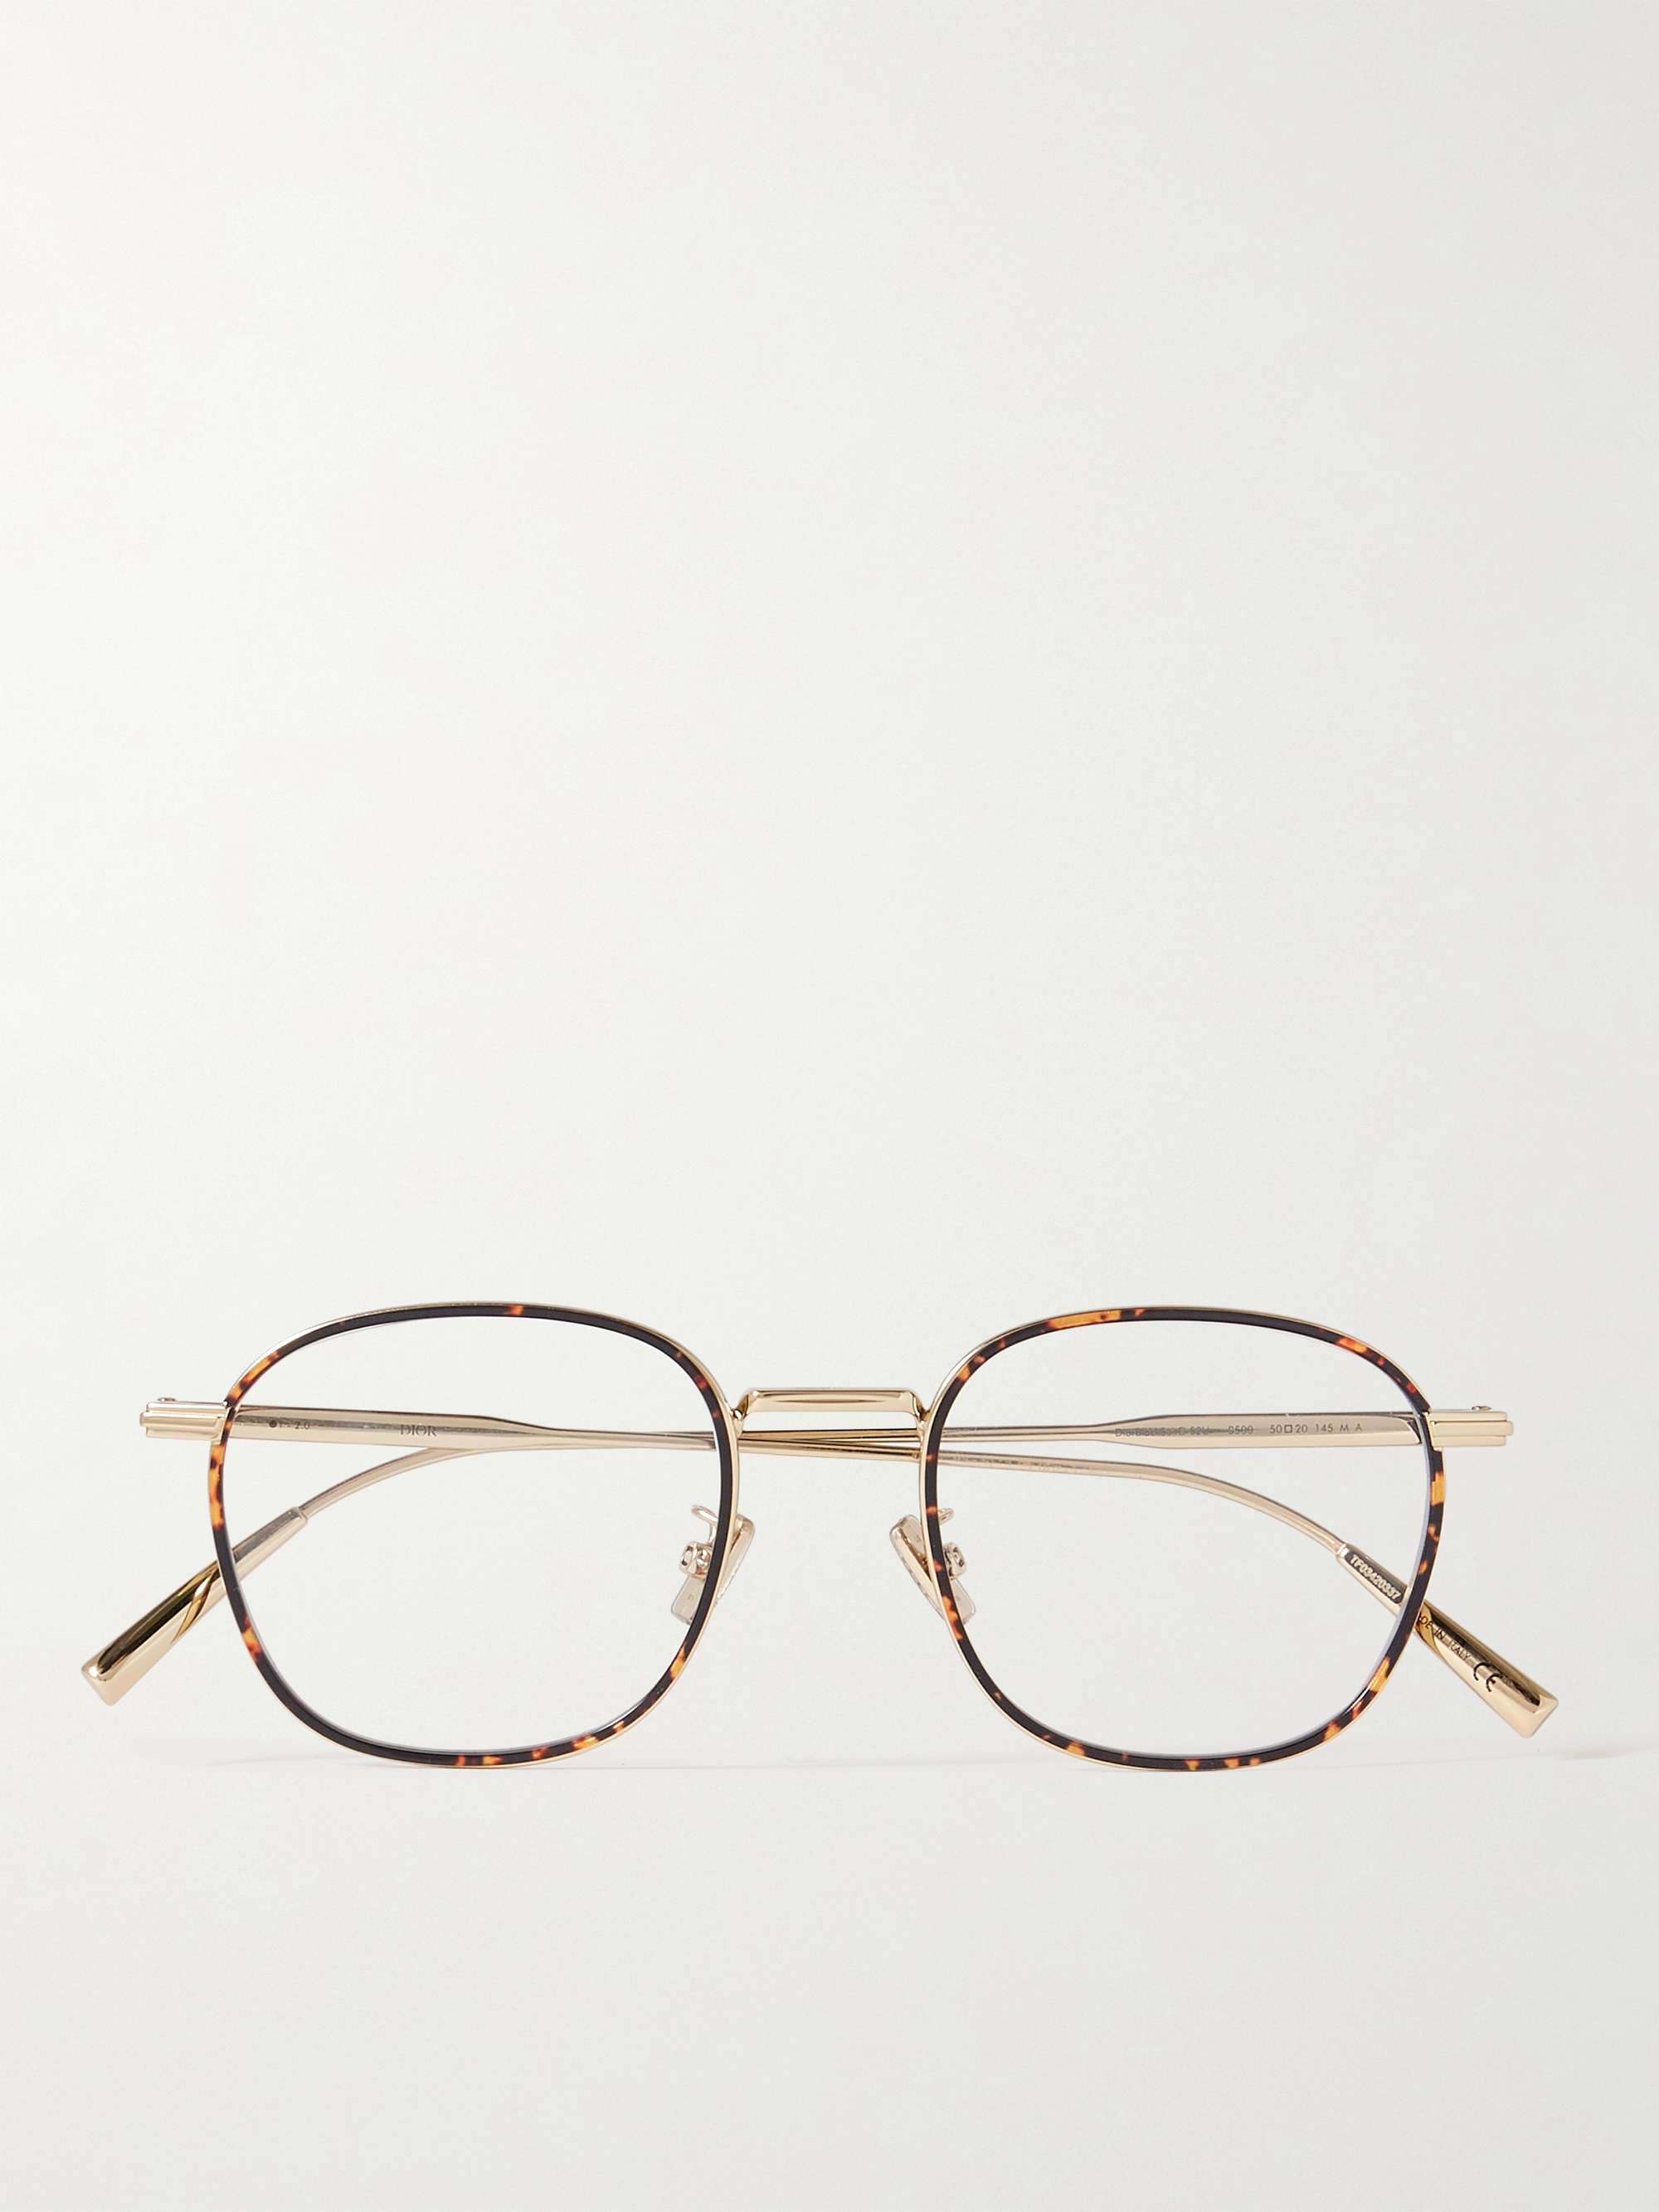 DIOR EYEWEAR DiorBlackSuit S2U Round-Frame Tortoiseshell Acetate and Gold-Tone Optical Glasses